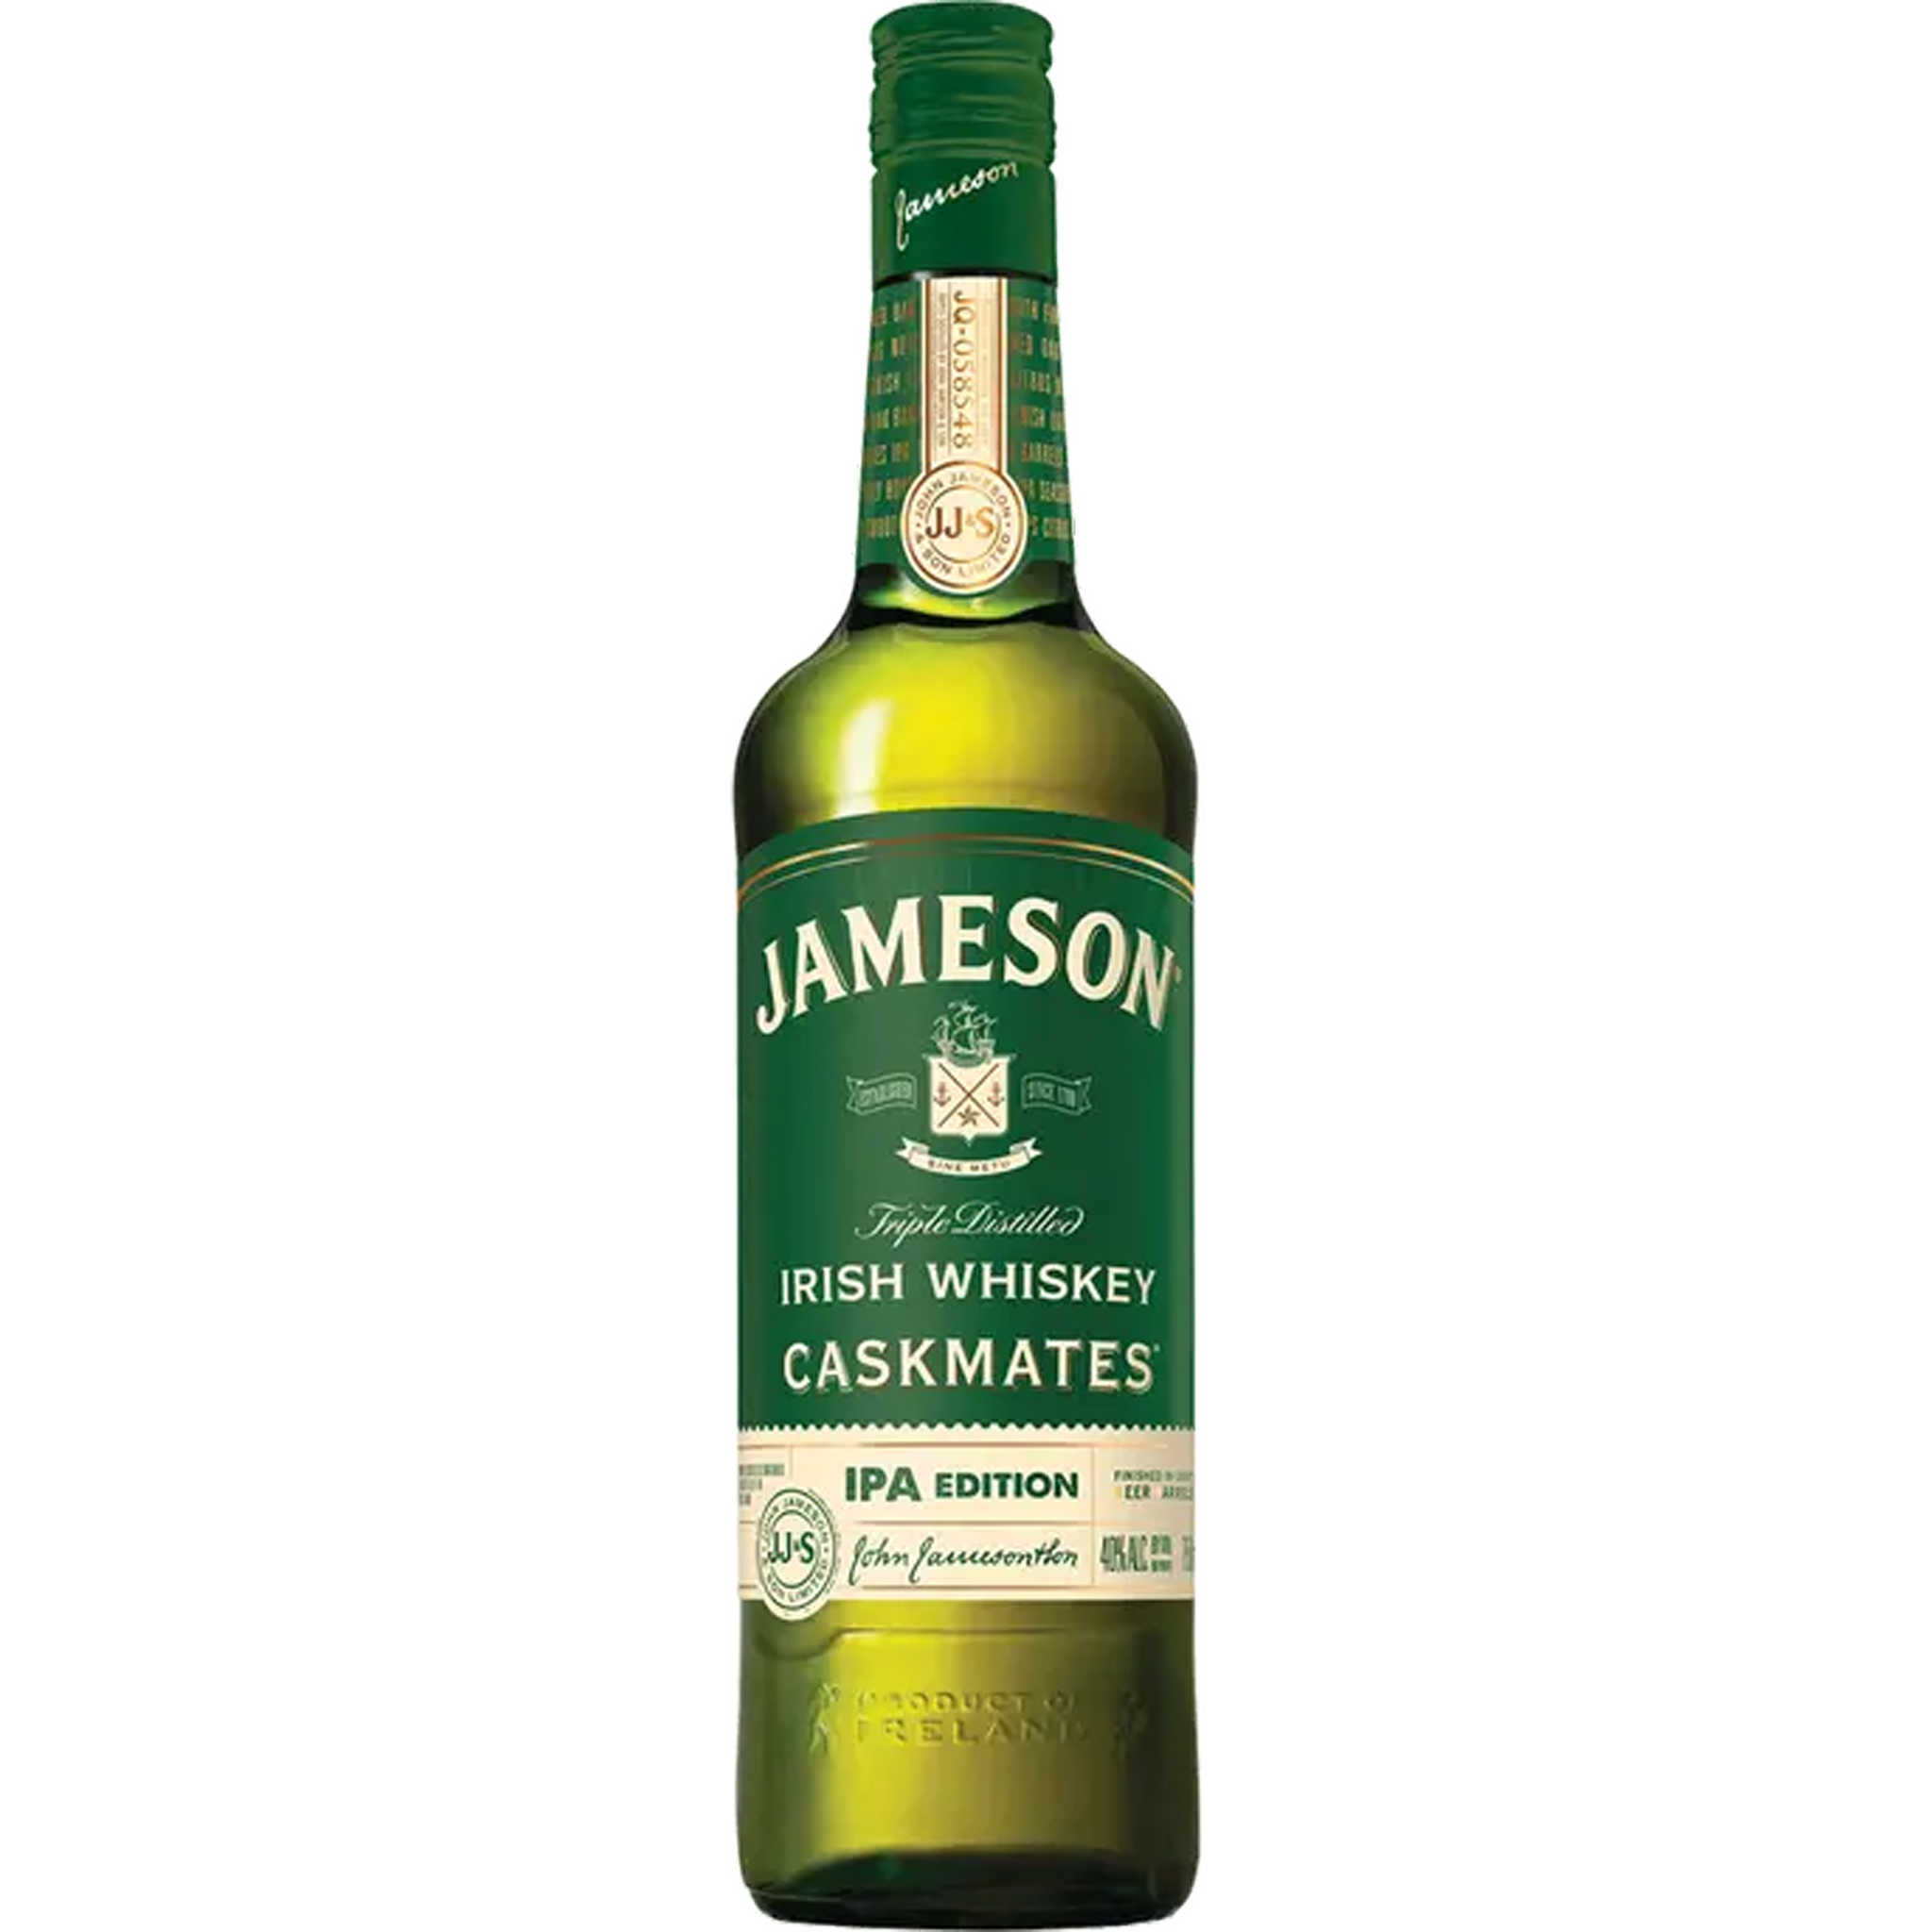 Jameson IPA Edition Irish Whiskey | LiquorOnBroadway Caskmates